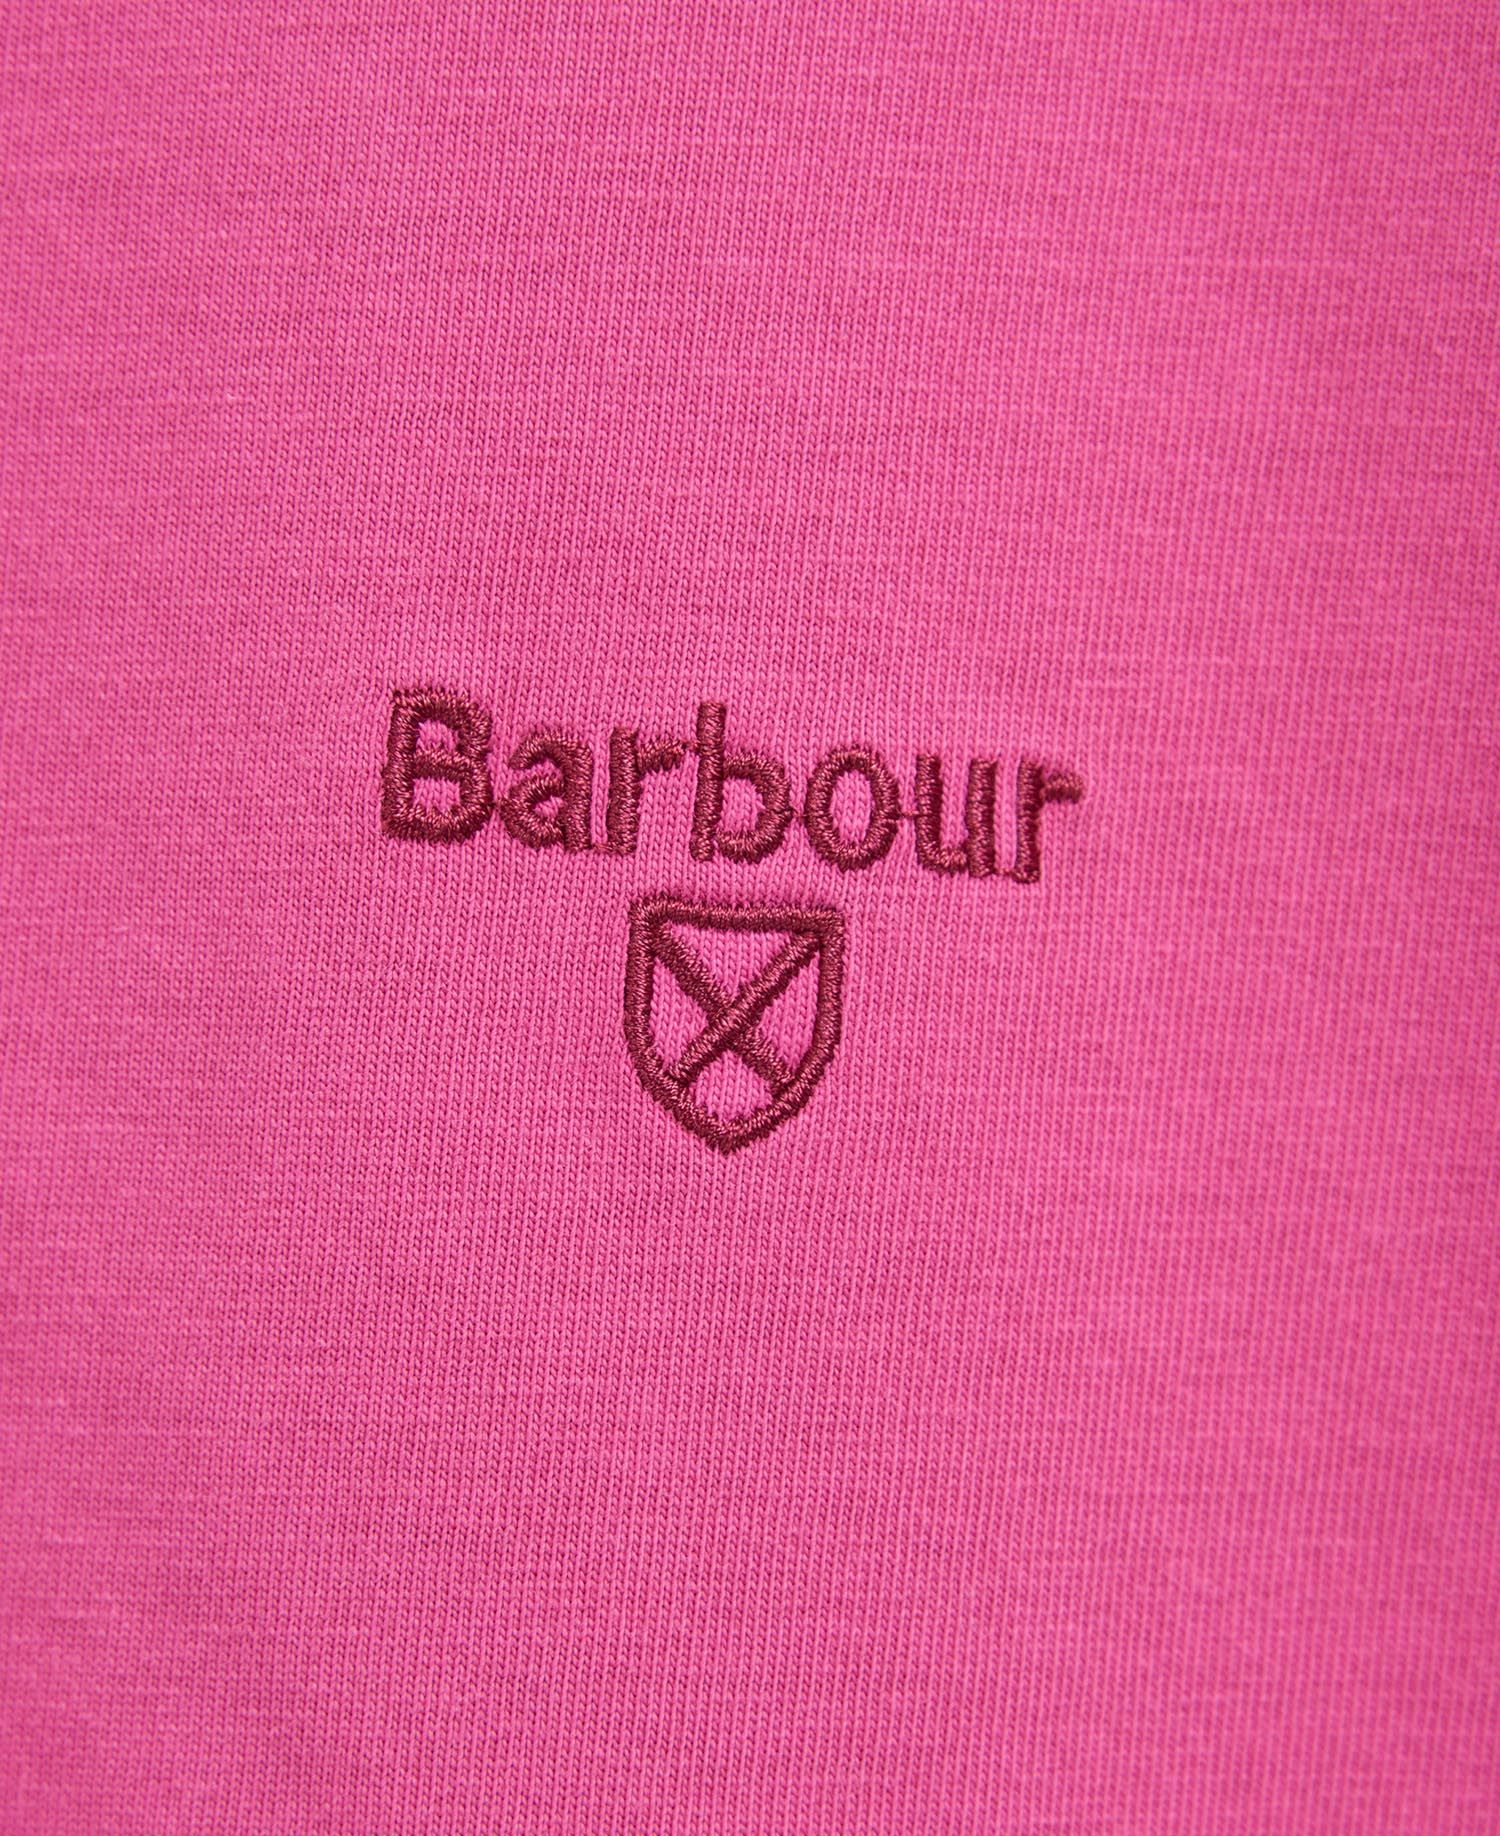 Barbour Garment Dyed T-Shirt Fuchsia